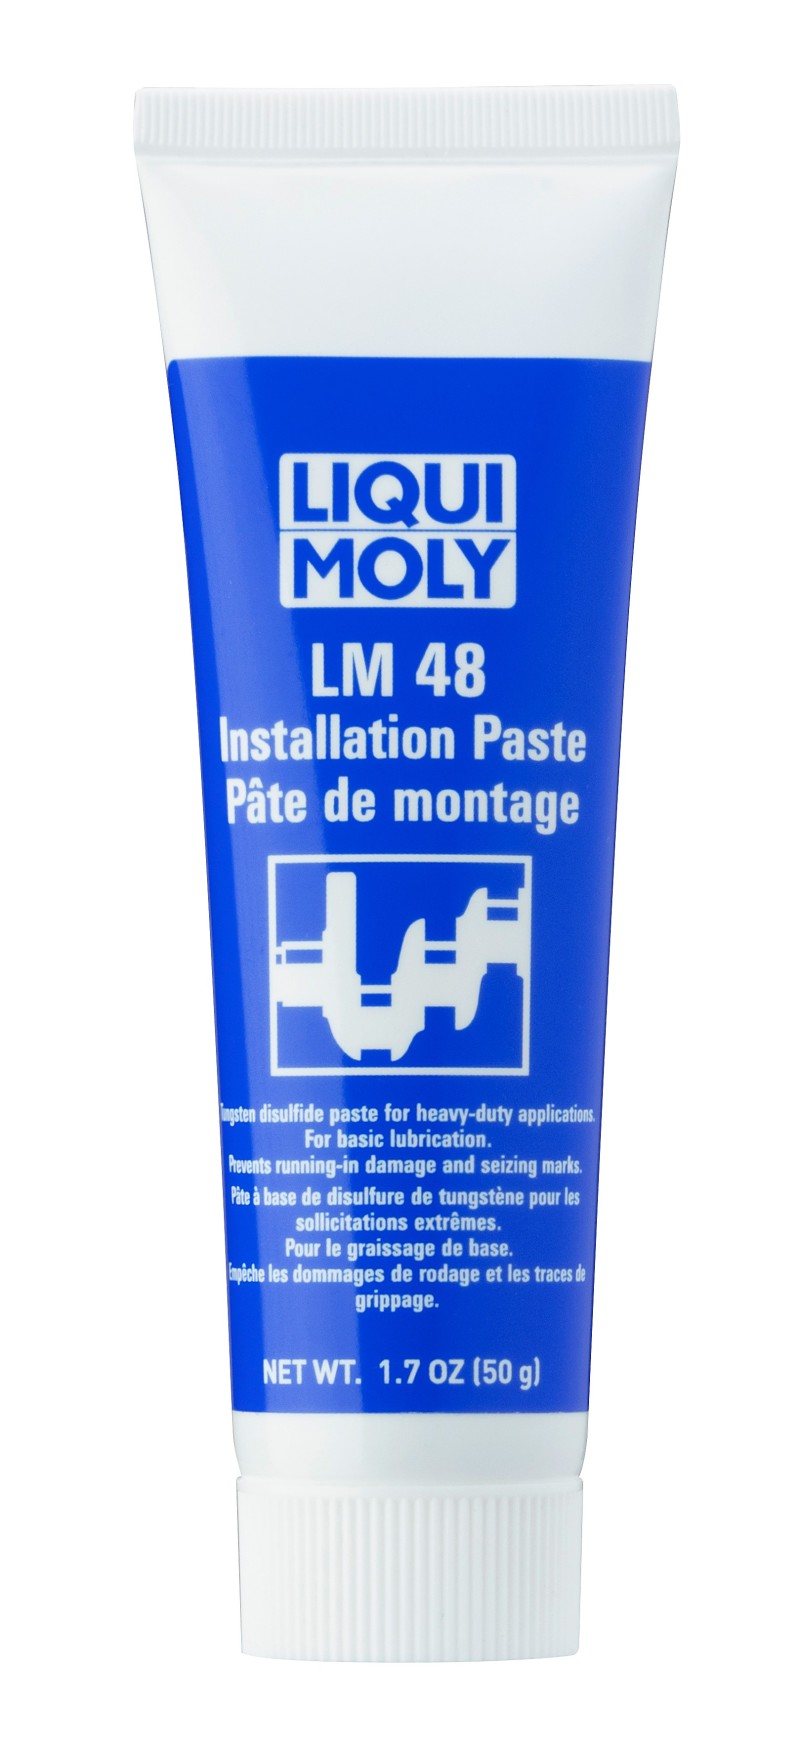 LIQUI MOLY LM 48 Installation Paste.